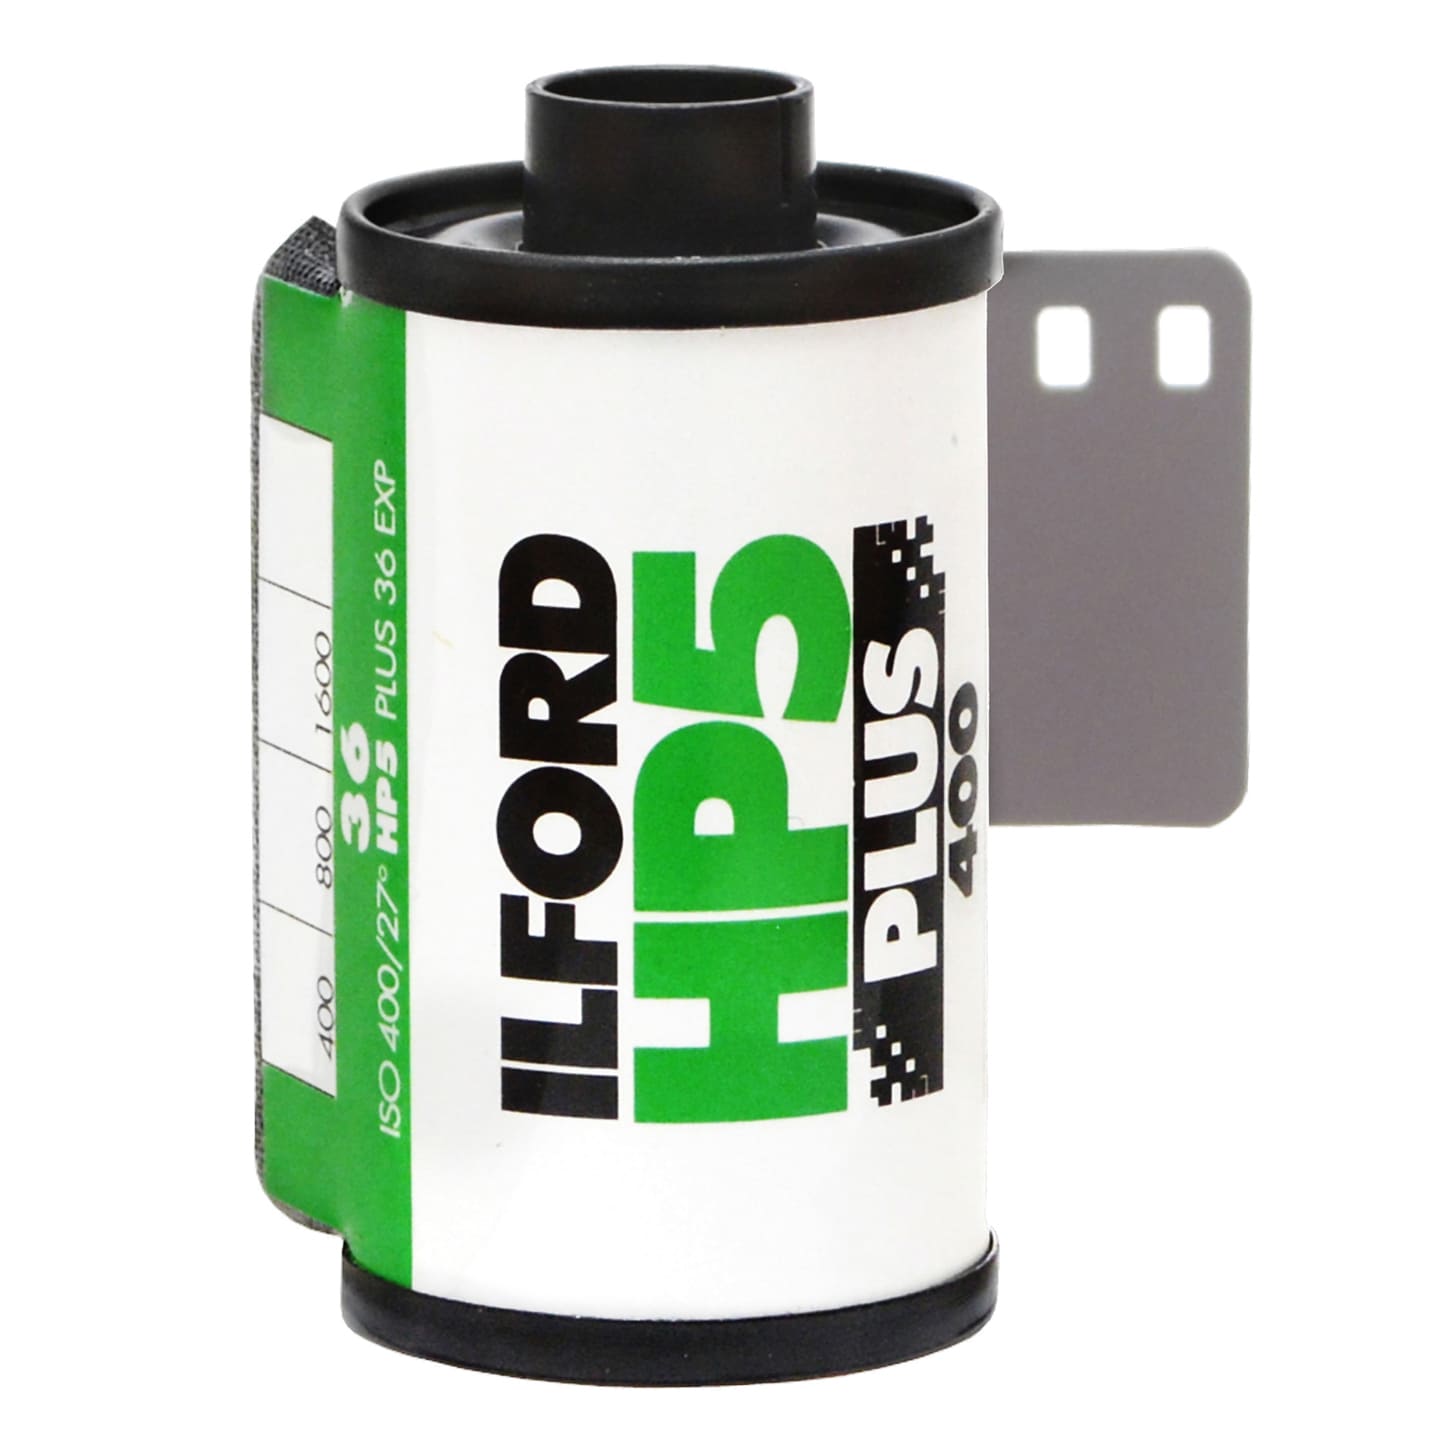 Ilford HP5+ 400